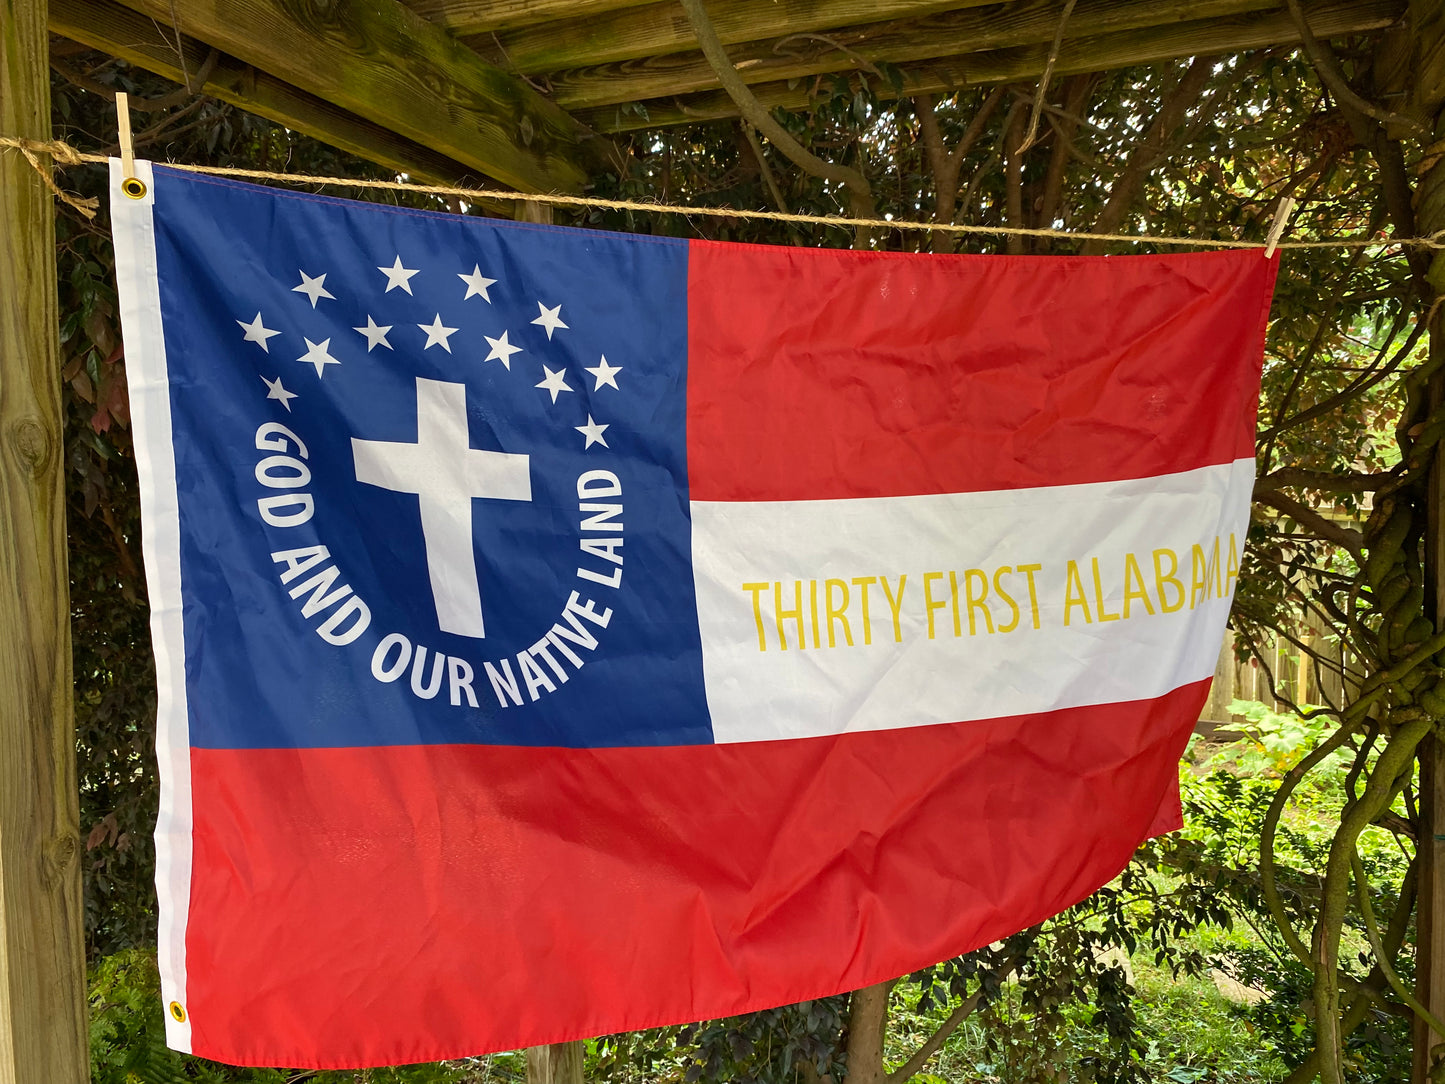 31st Alabama "God and Our Native Land" House Flag